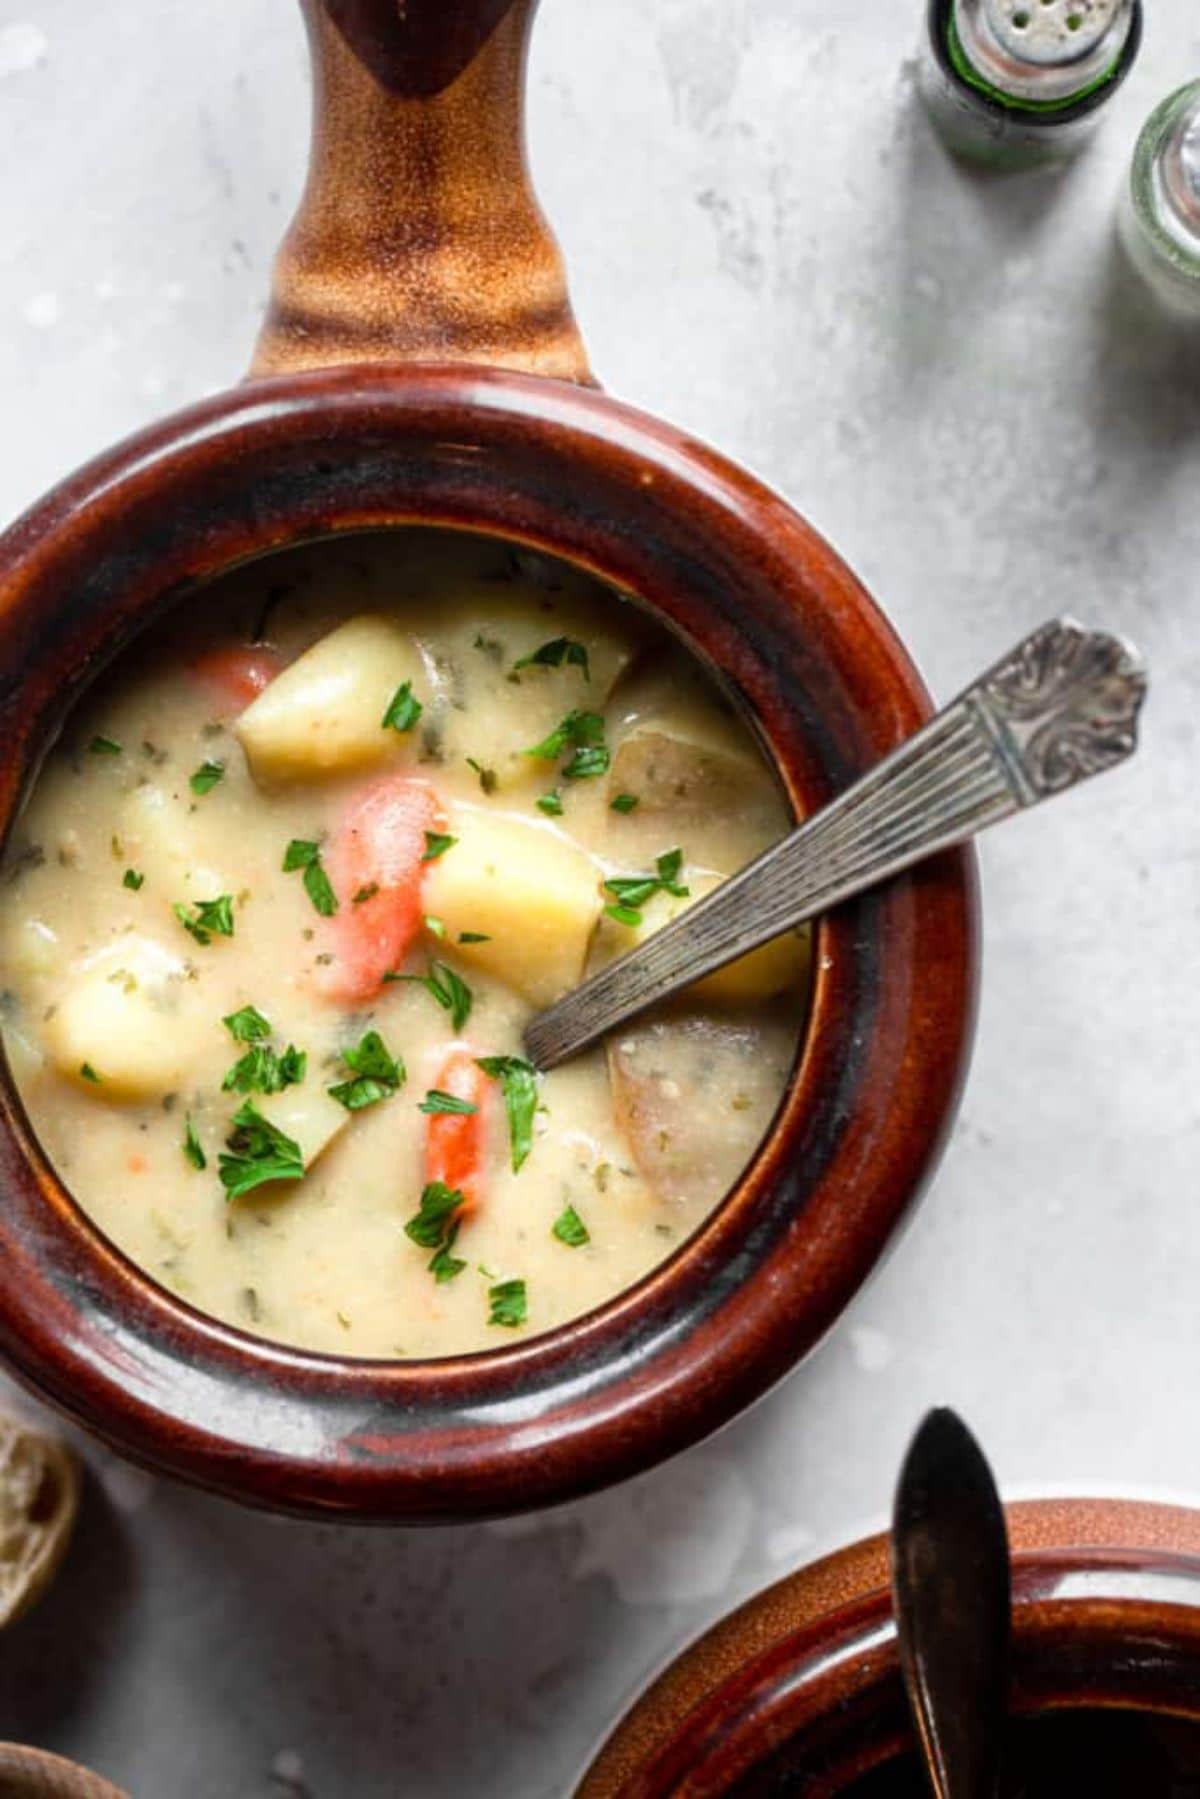 a wooden bowl full of potato soup